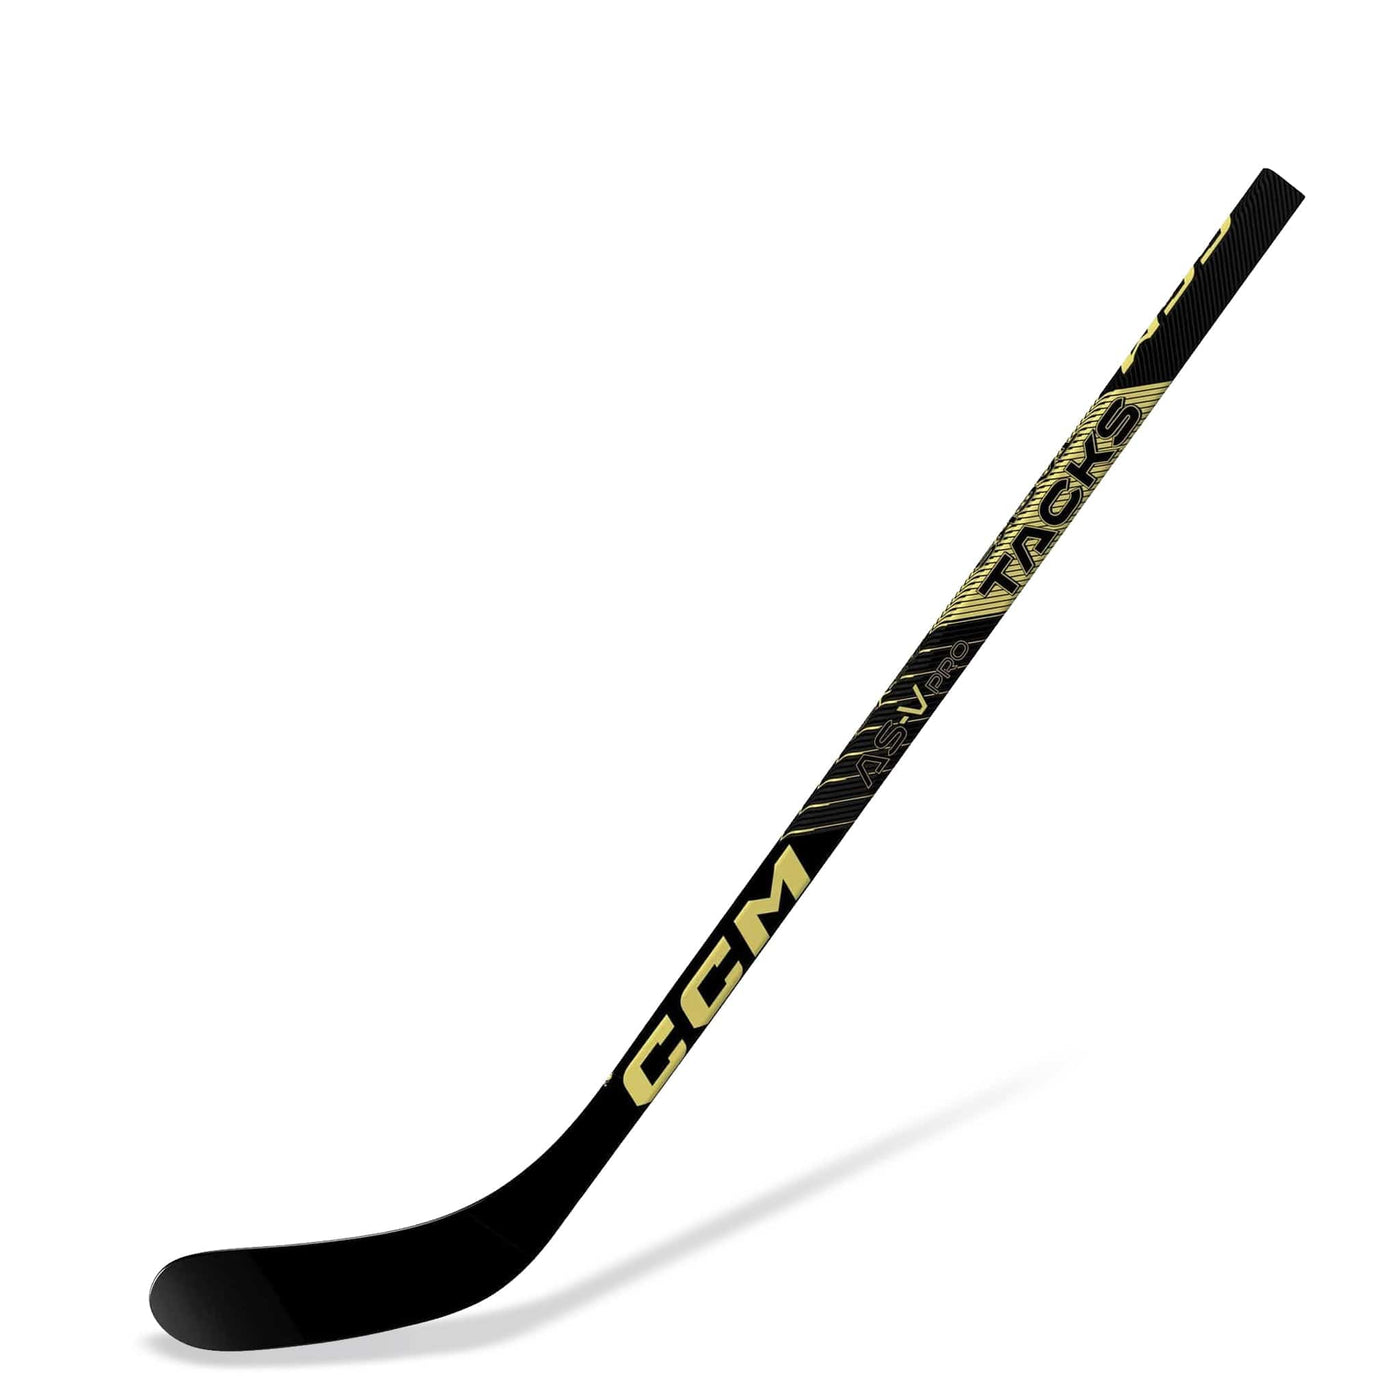 CCM Super Tacks AS-V Composite Mini Hockey Stick - The Hockey Shop Source For Sports